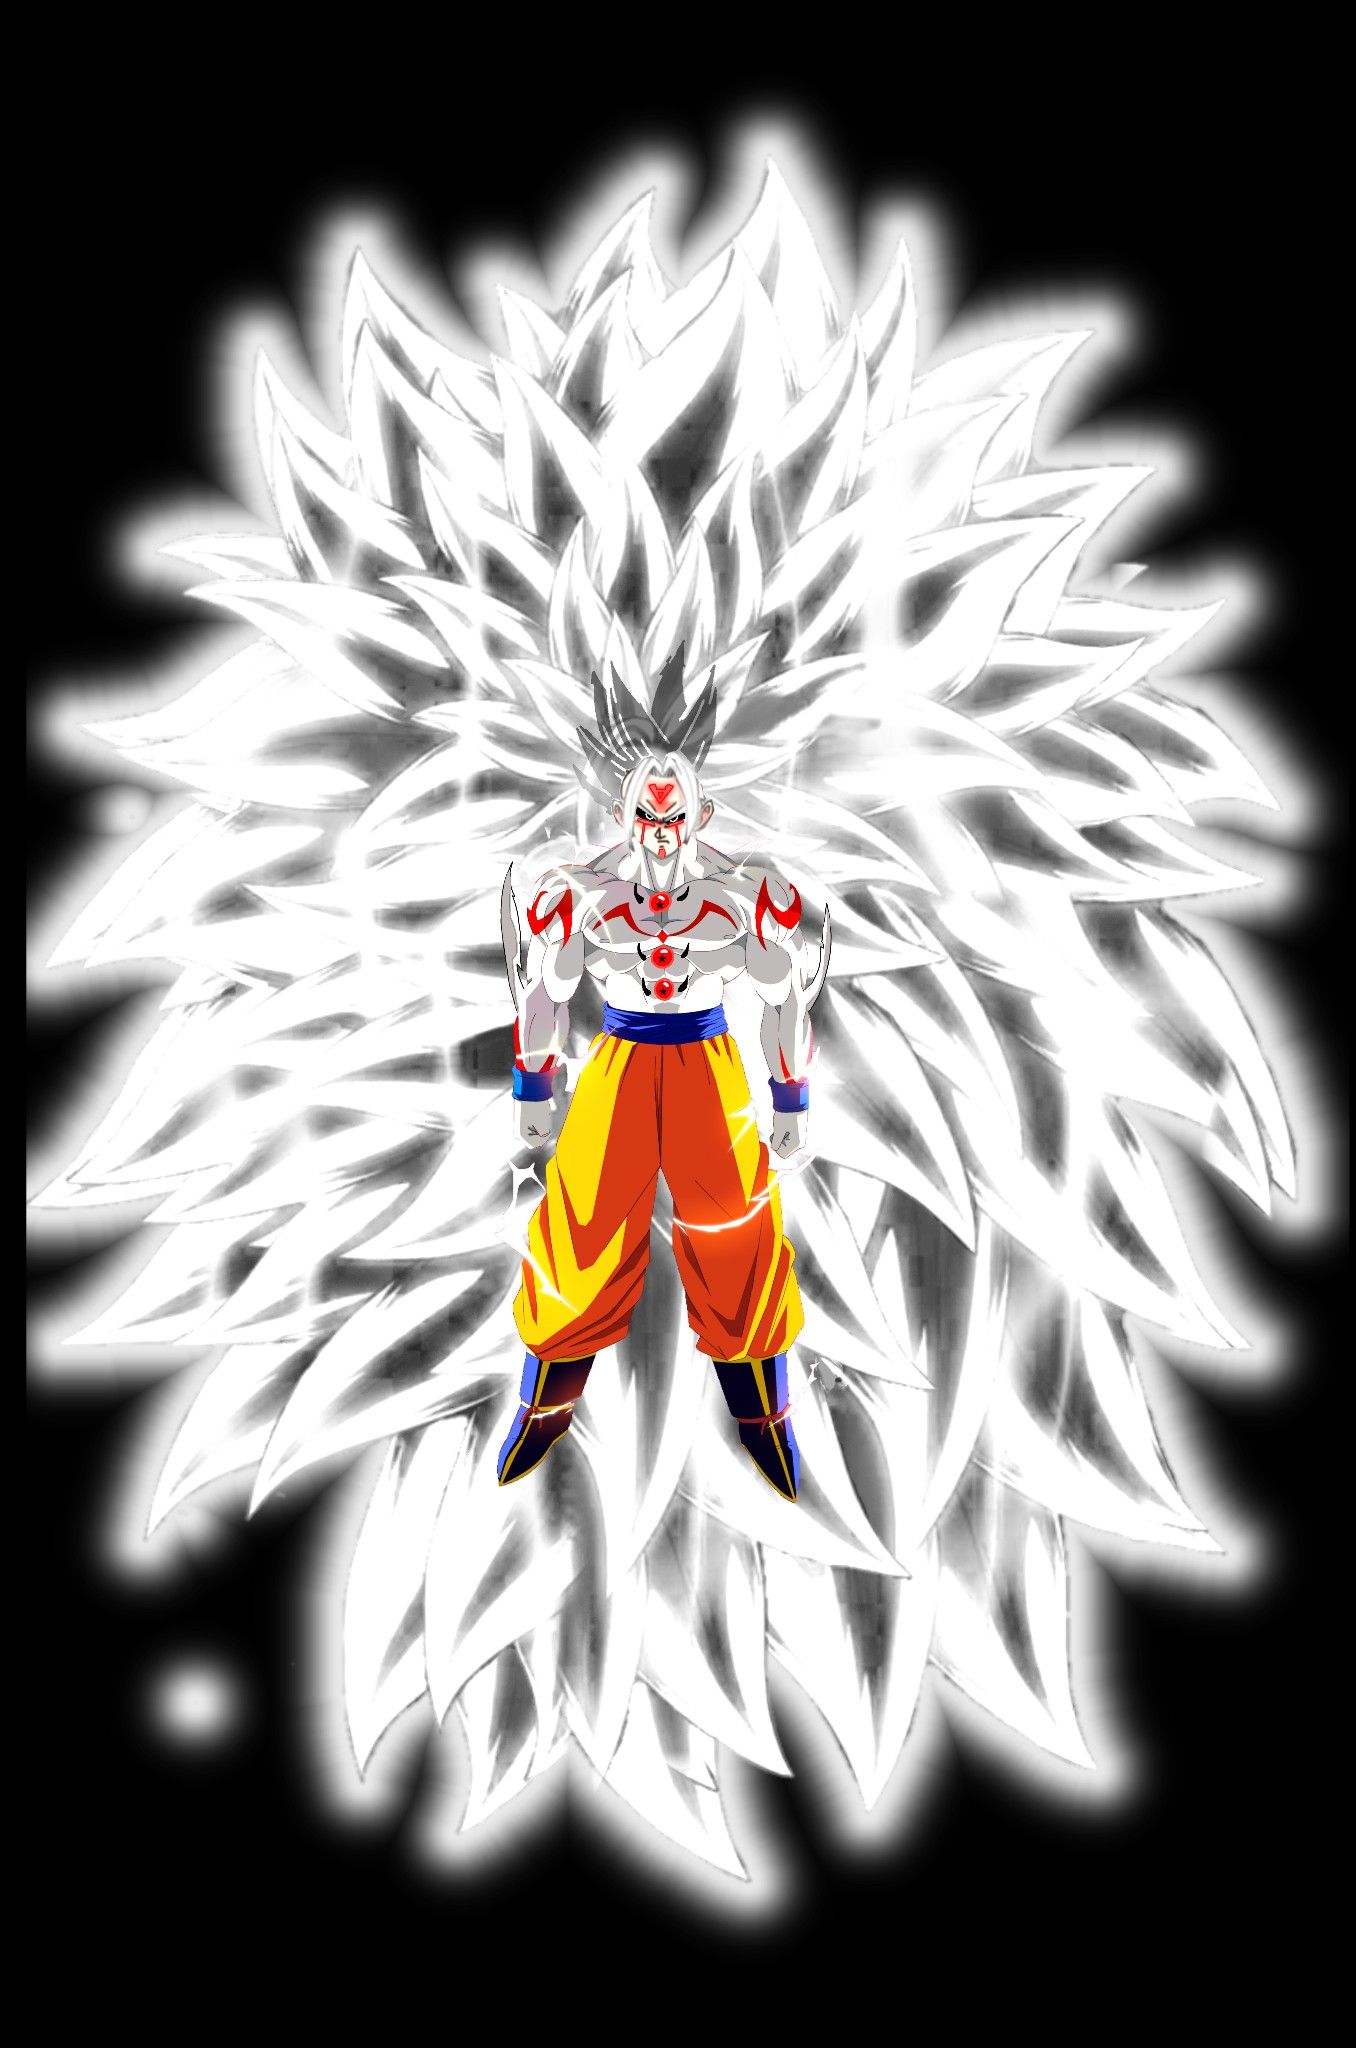 Goku Super SSJ Infinity Reborn Omni God demon final form. Anime dragon ball goku, Dragon ball wallpaper, Dragon ball artwork